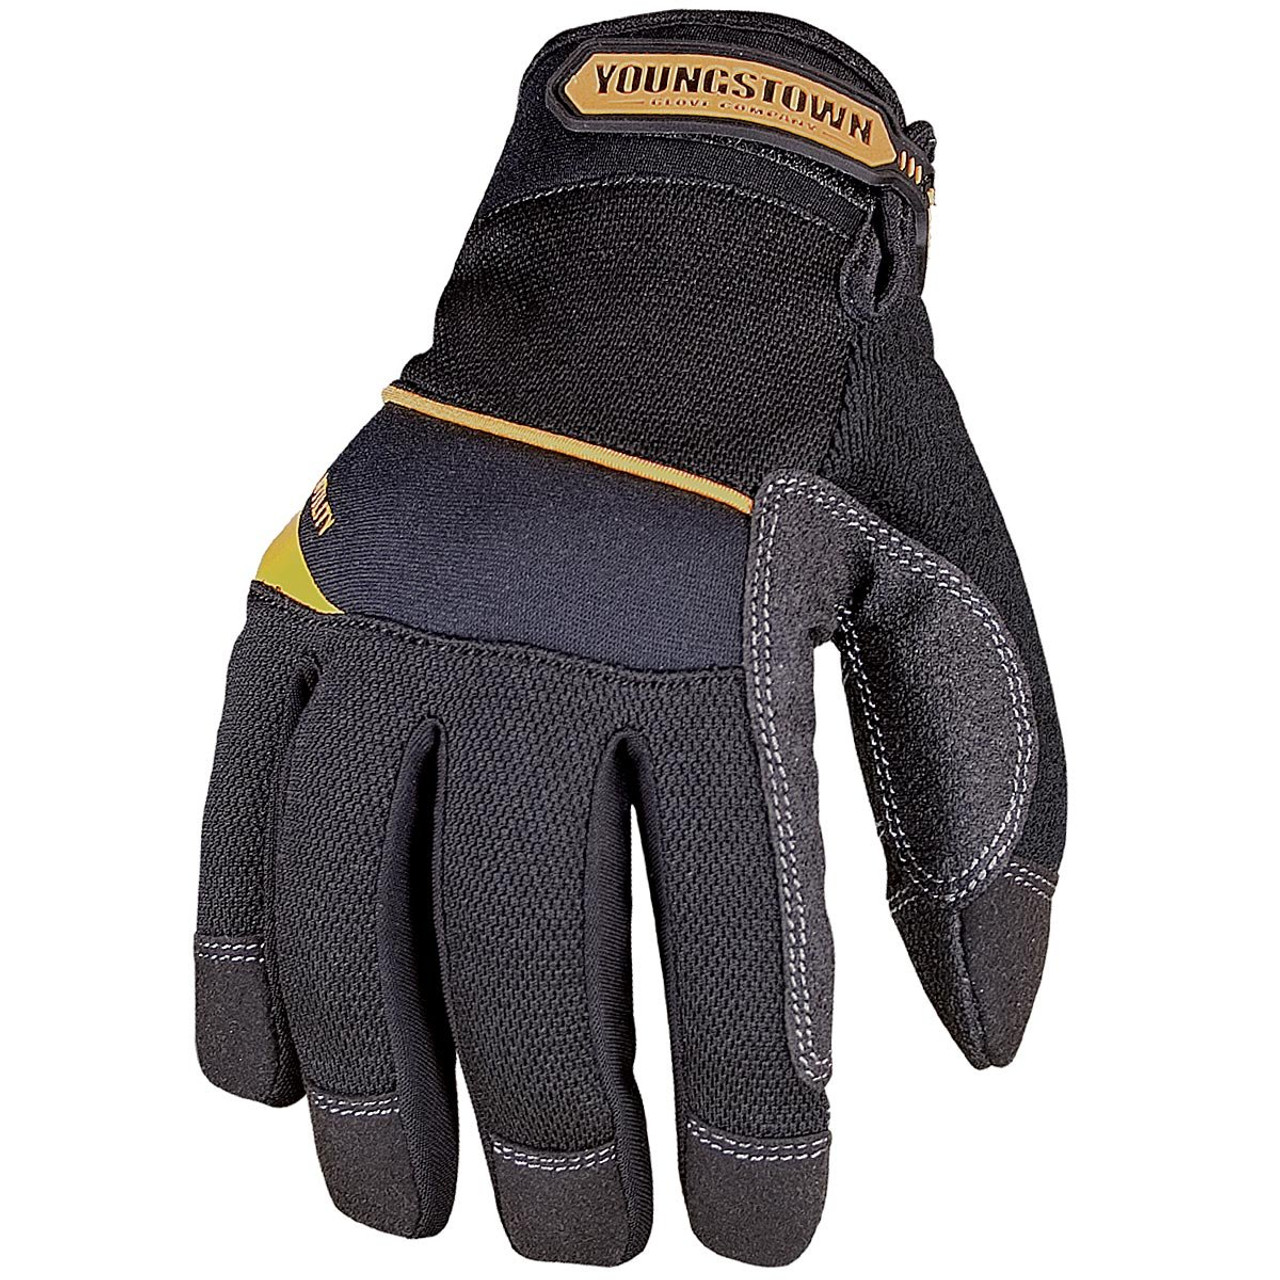 Bedachtzaam Guggenheim Museum brandwonden Youngstown Glove 03-3060-80-XL General Utility Plus Performance Handschoen  XL, Zwart | JB Tool verkoop